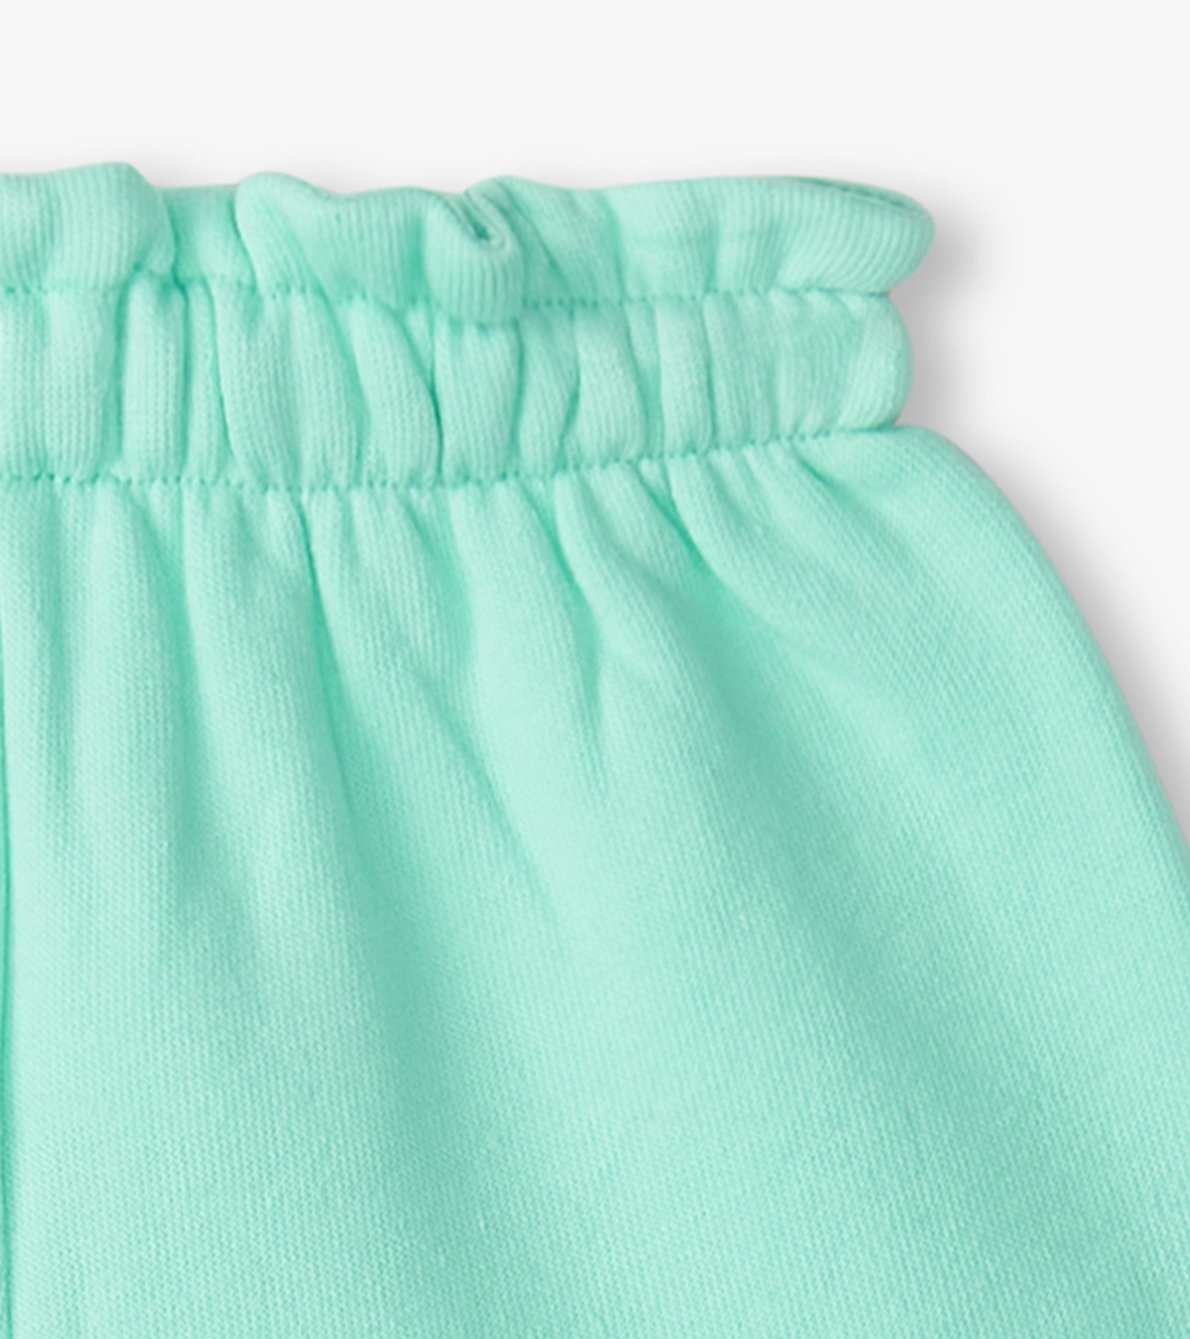 View larger image of Baby & Toddler Girls Ice Green Paper Bag Shorts